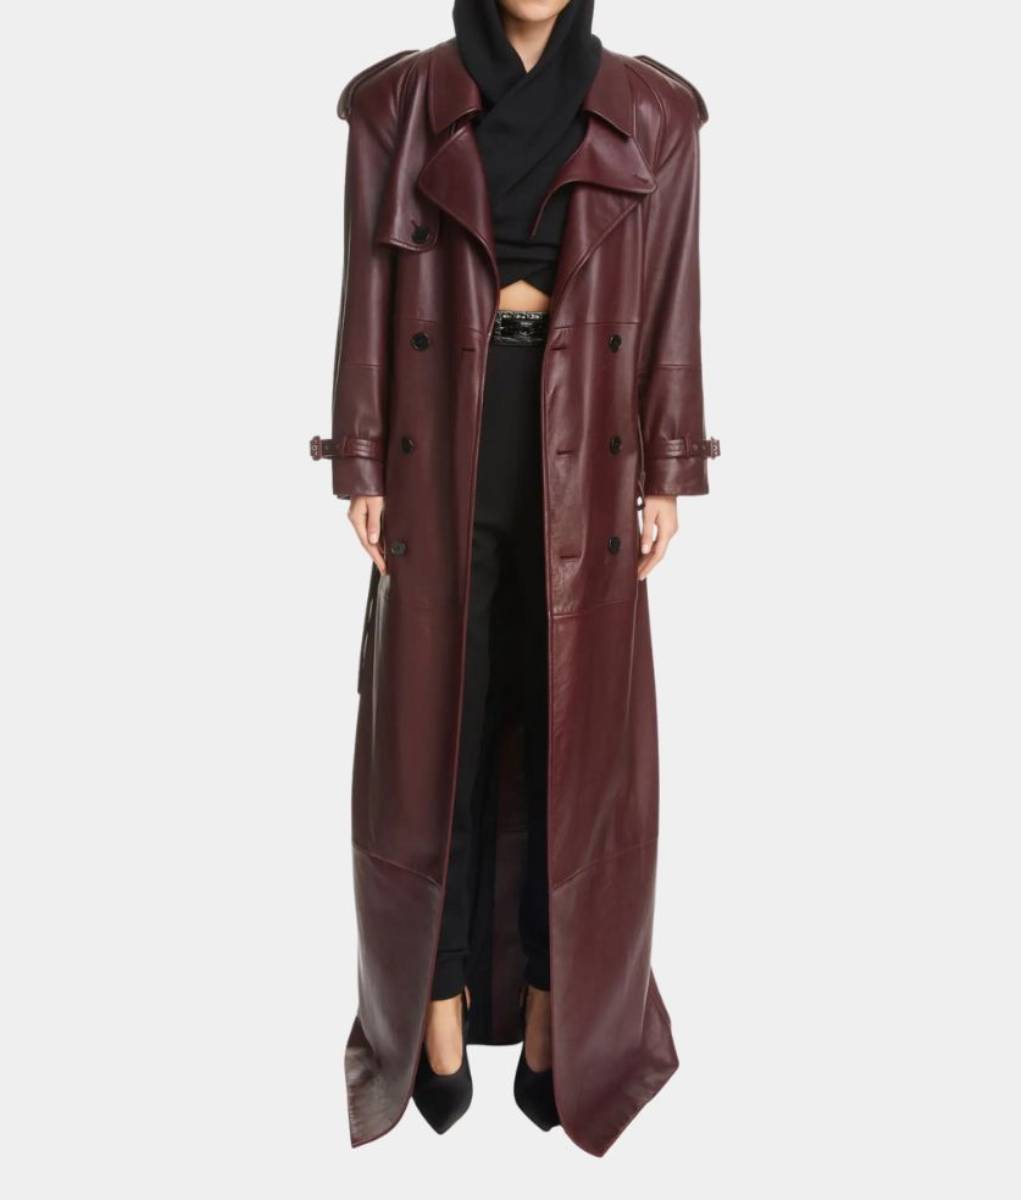 AHS Delicate Kim Kardashian aka Siobhan Walsh Seinfeld Long Burgundy Leather Coat – Front View – 1